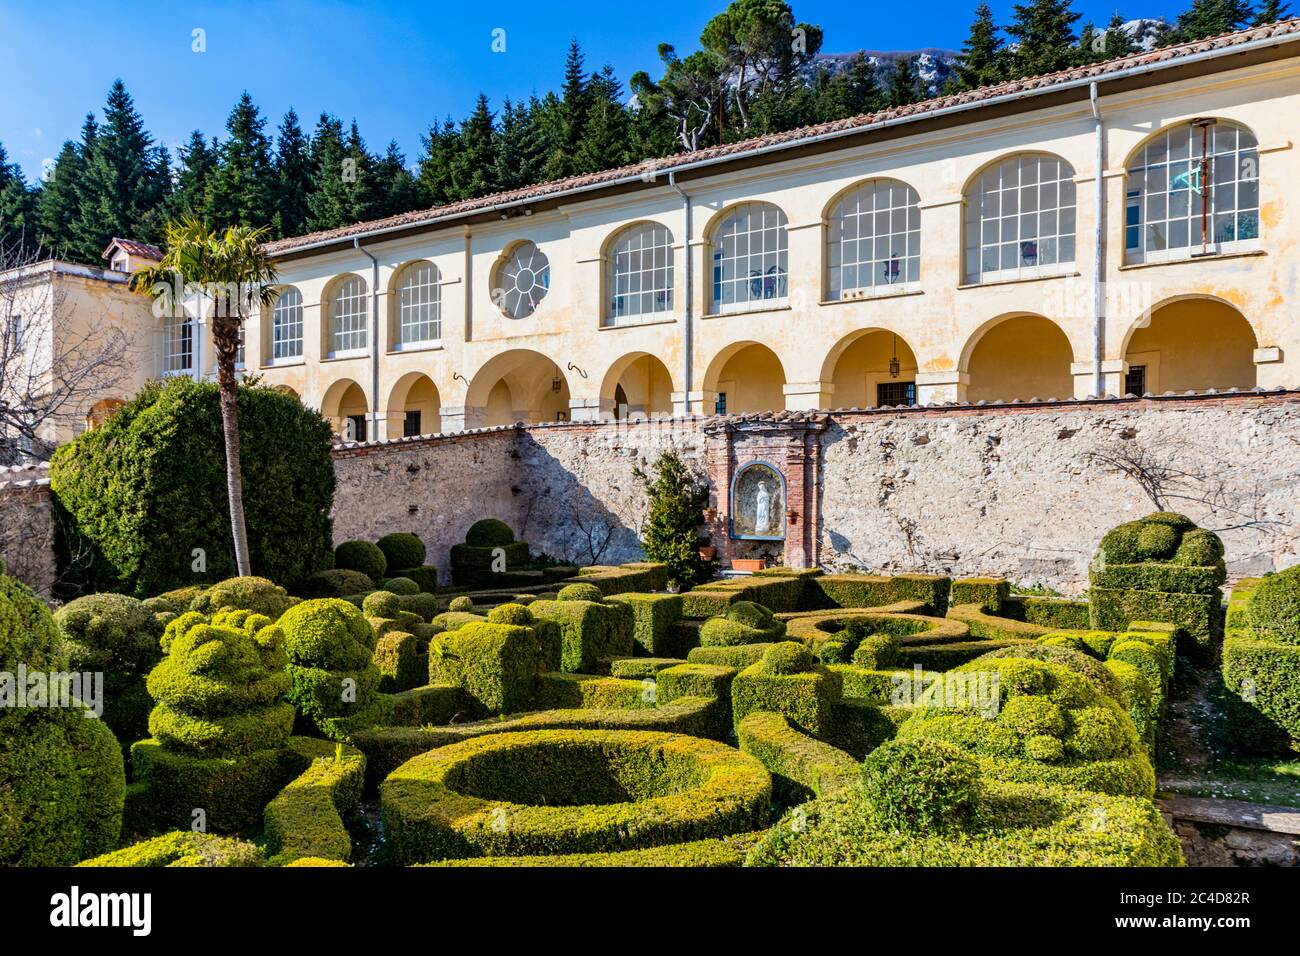 March 24, 2019 - Collepardo, Frosinone, Lazio, Italy - Trisulti Charterhouse, former Carthusian and Cistercian monastery. The garden, former vegetable Stock Photo